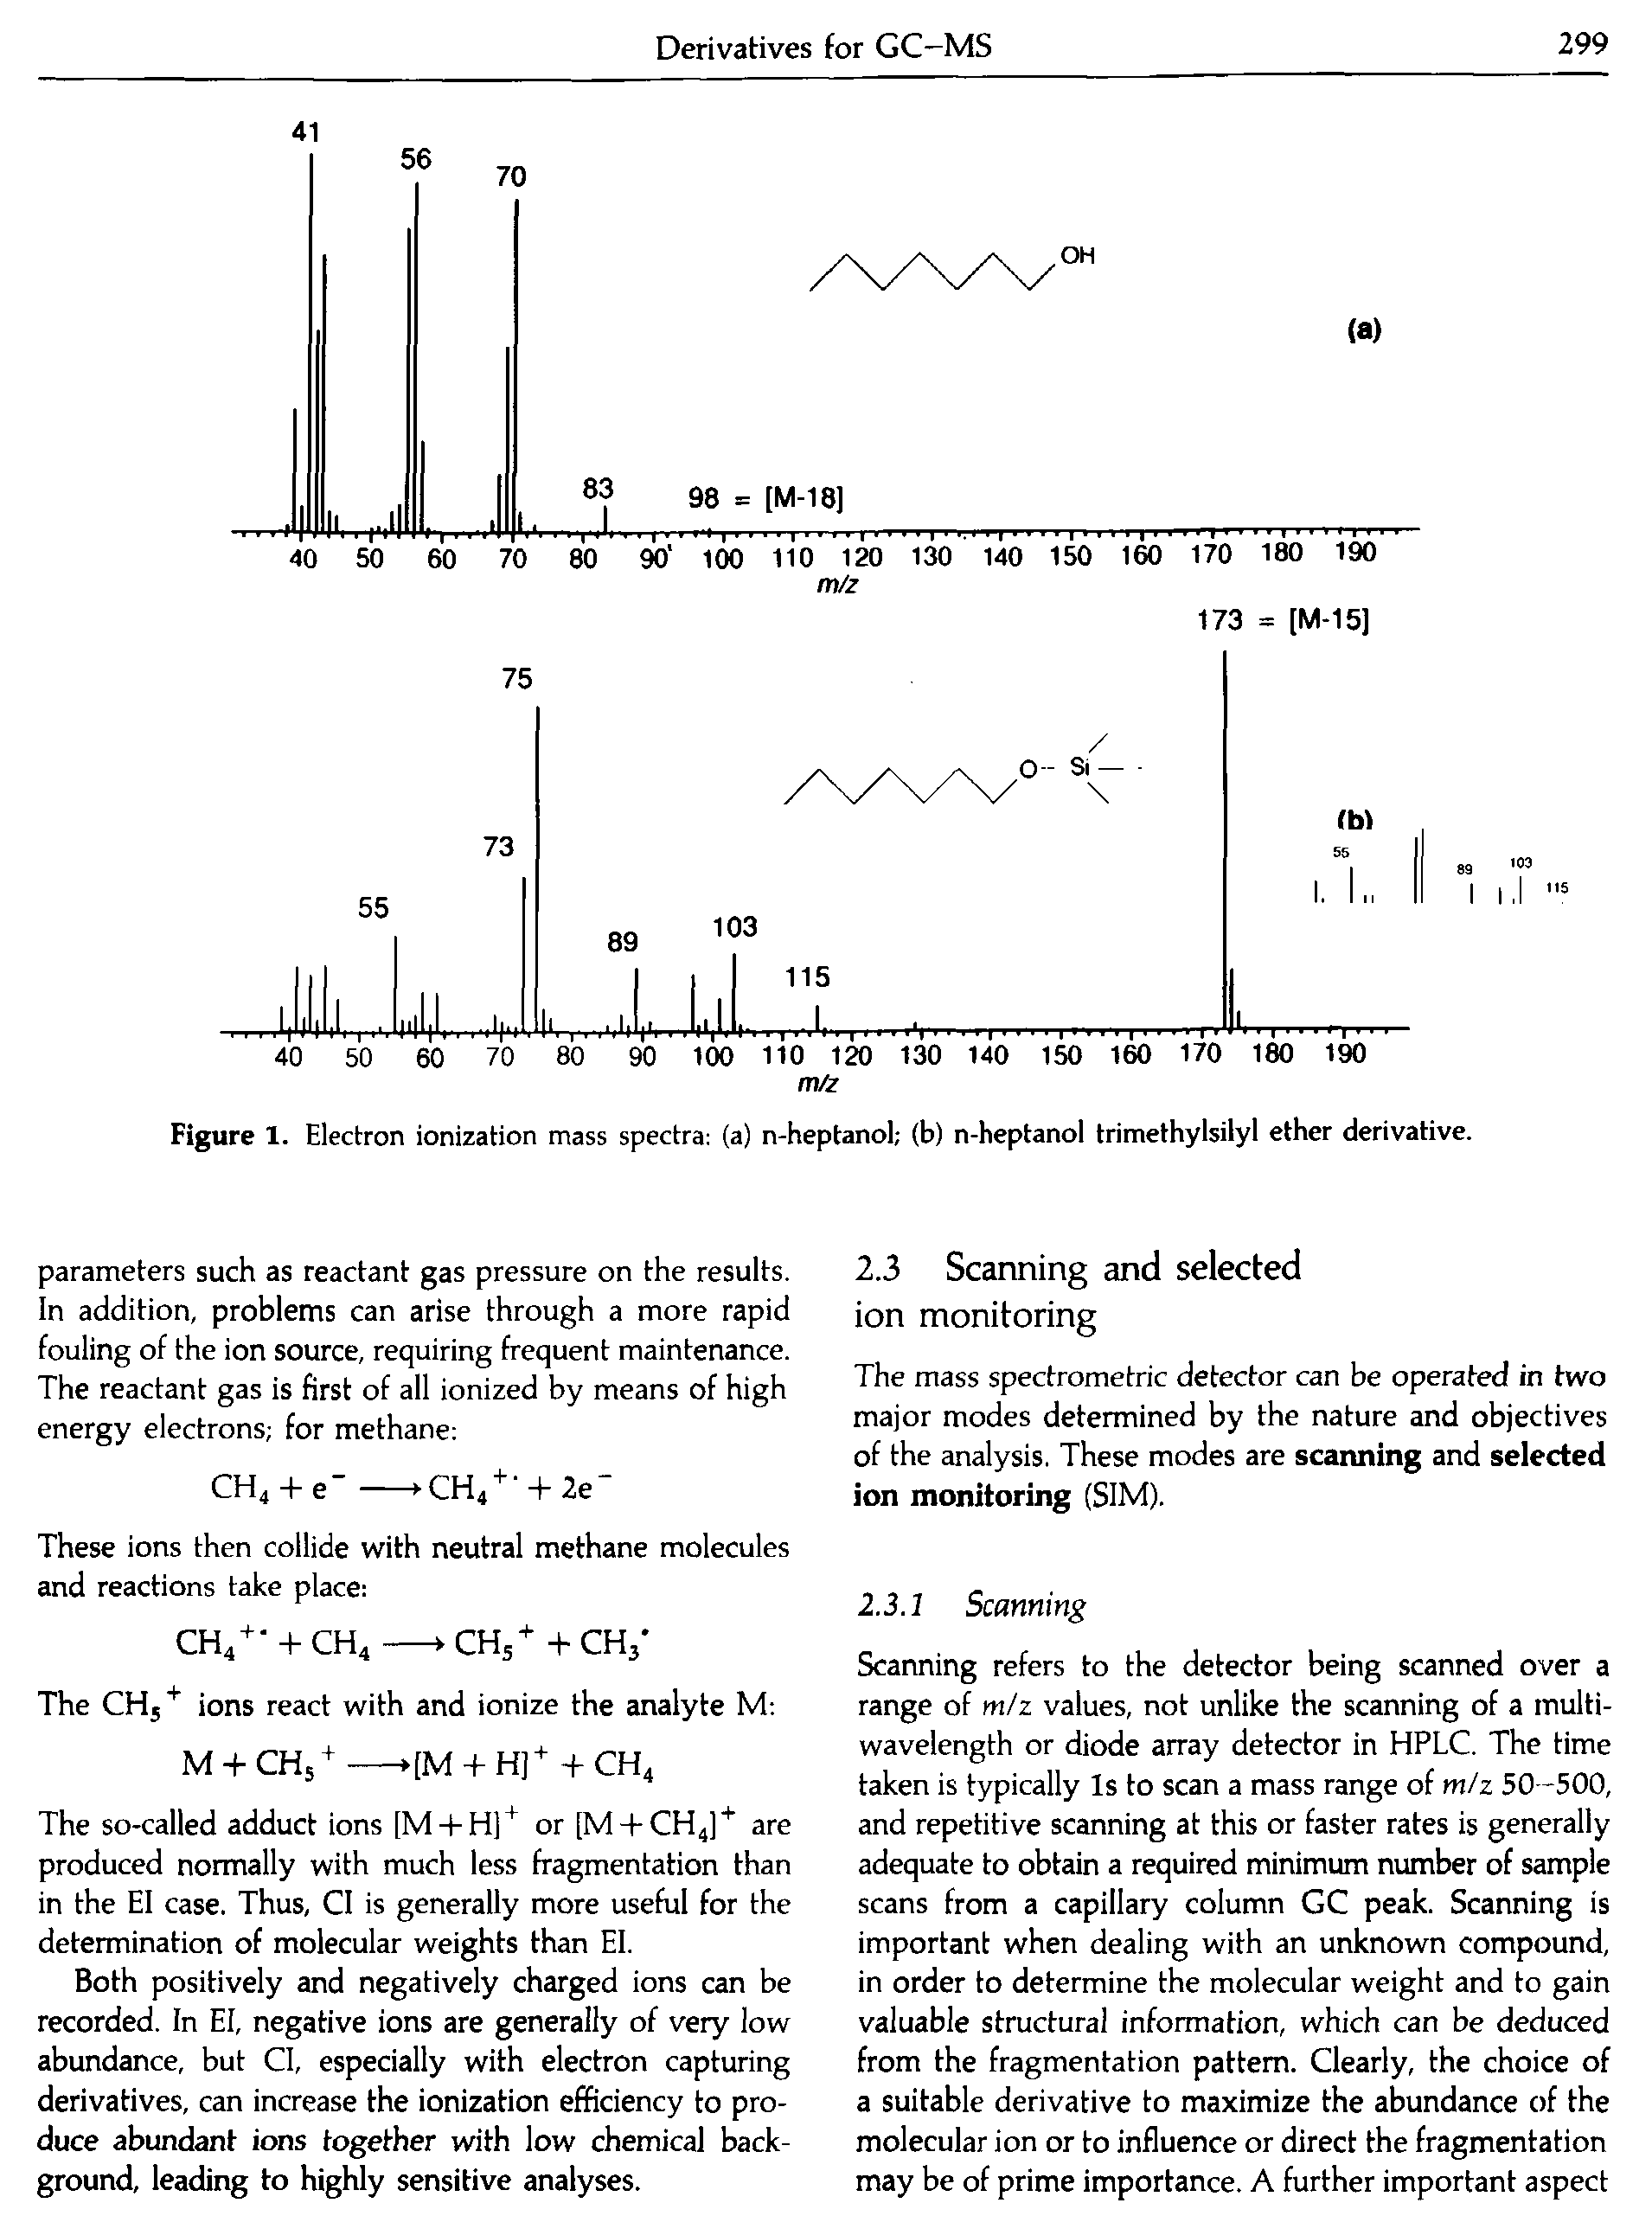 Figure 1. Electron ionization mass spectra (a) n-heptanol (b) n-heptanol trimethylsilyl ether derivative.